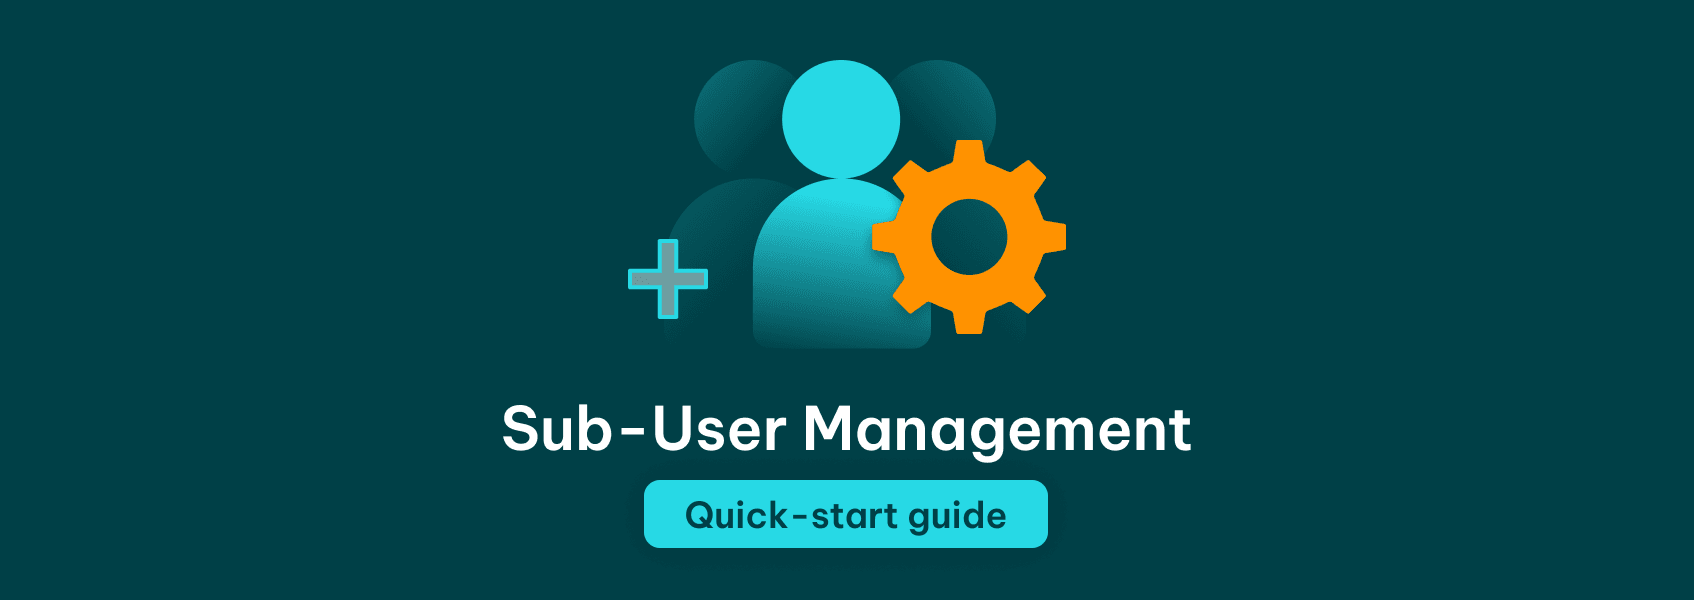 Sub-User Management Quick-Start Guide